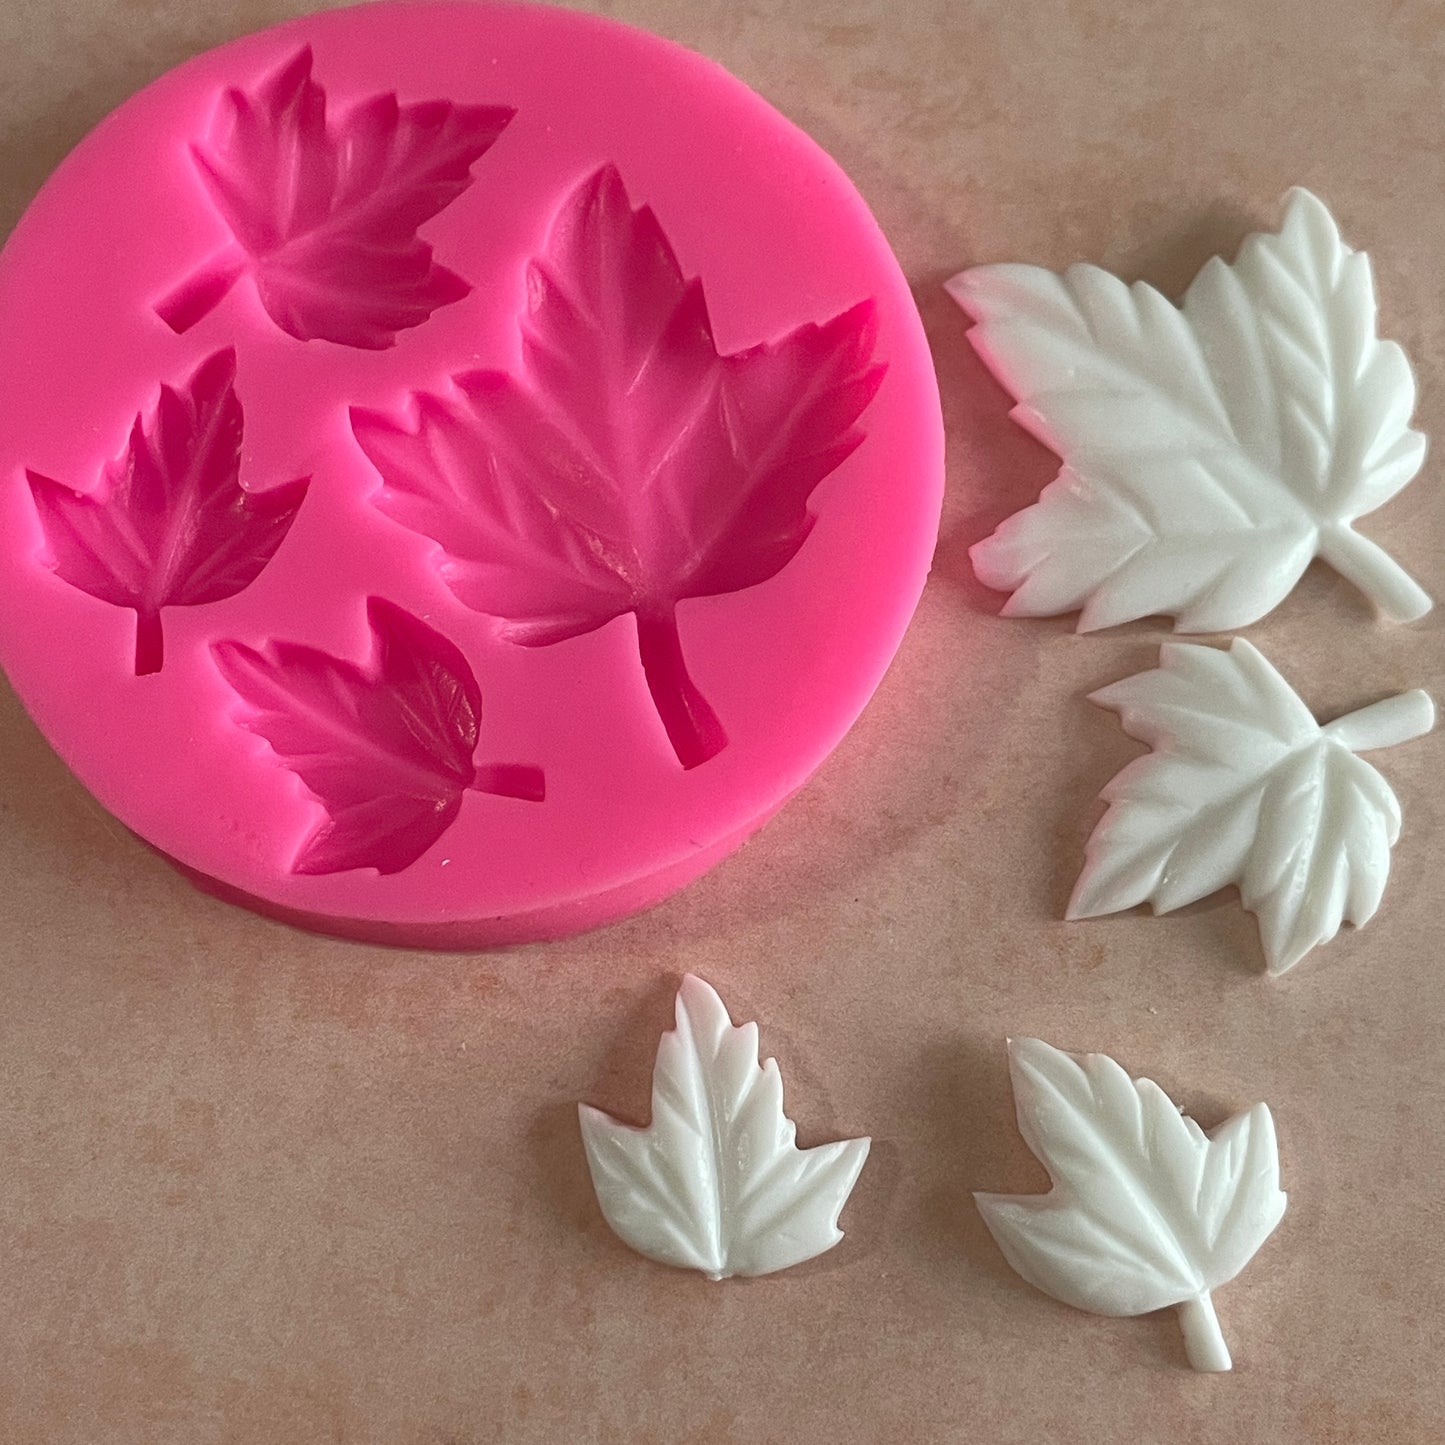 4 Maple Ivy Leaf Polymer Clay Resin Mold